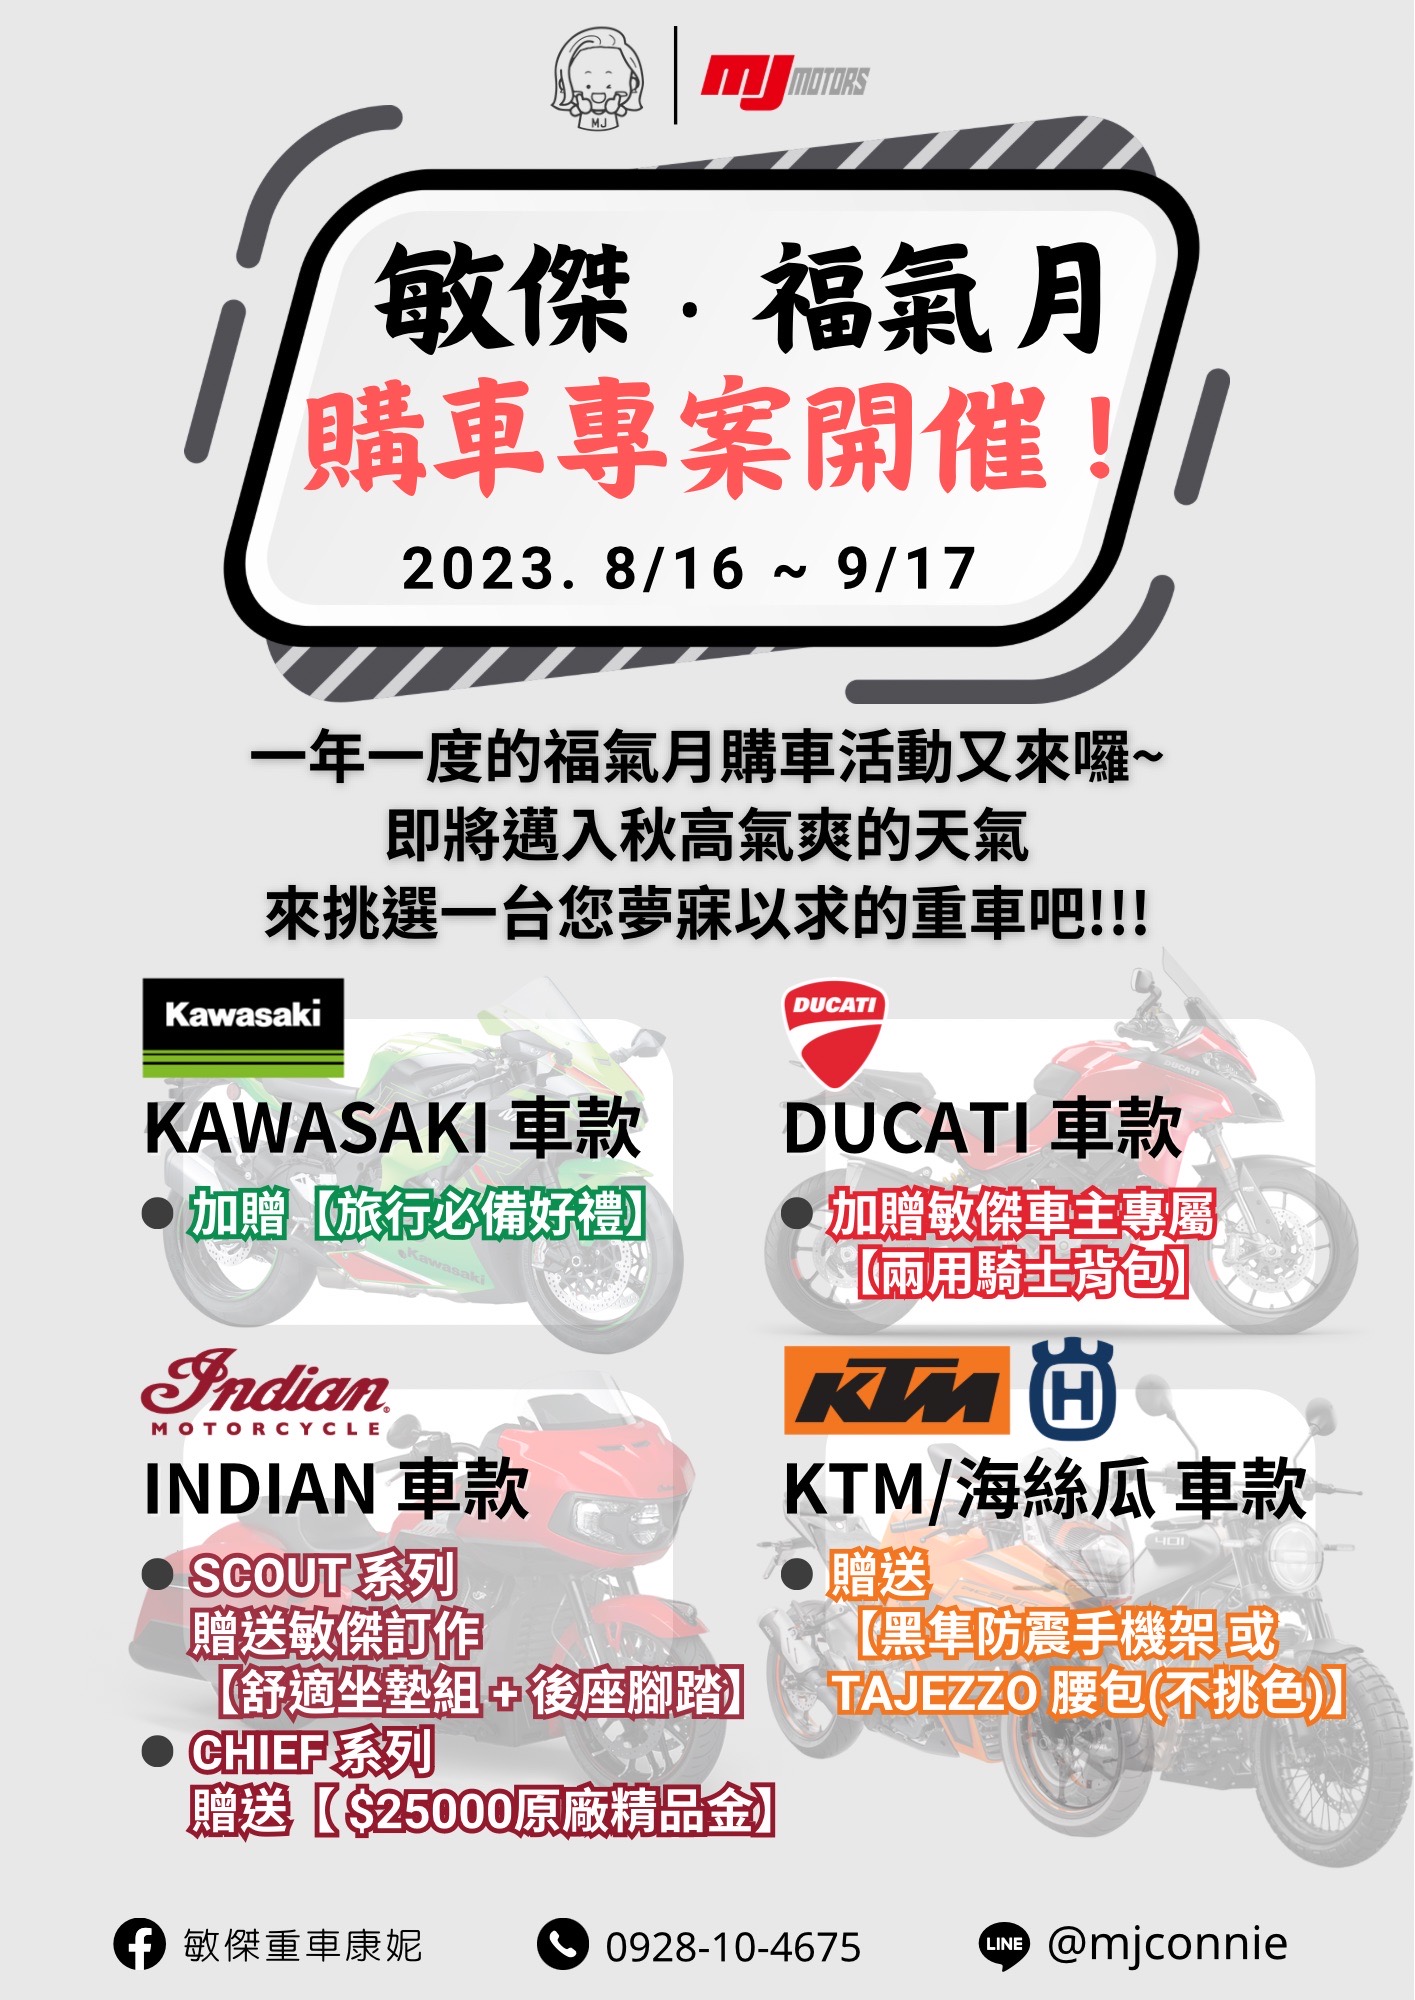 KAWASAKI Z650新車出售中 『敏傑康妮』Kawasaki Ninja650 Z650 雙缸紅牌好車 就在敏傑!! 9/14前購車 再加碼旅行必備好禮 | 敏傑車業資深銷售專員 康妮 Connie